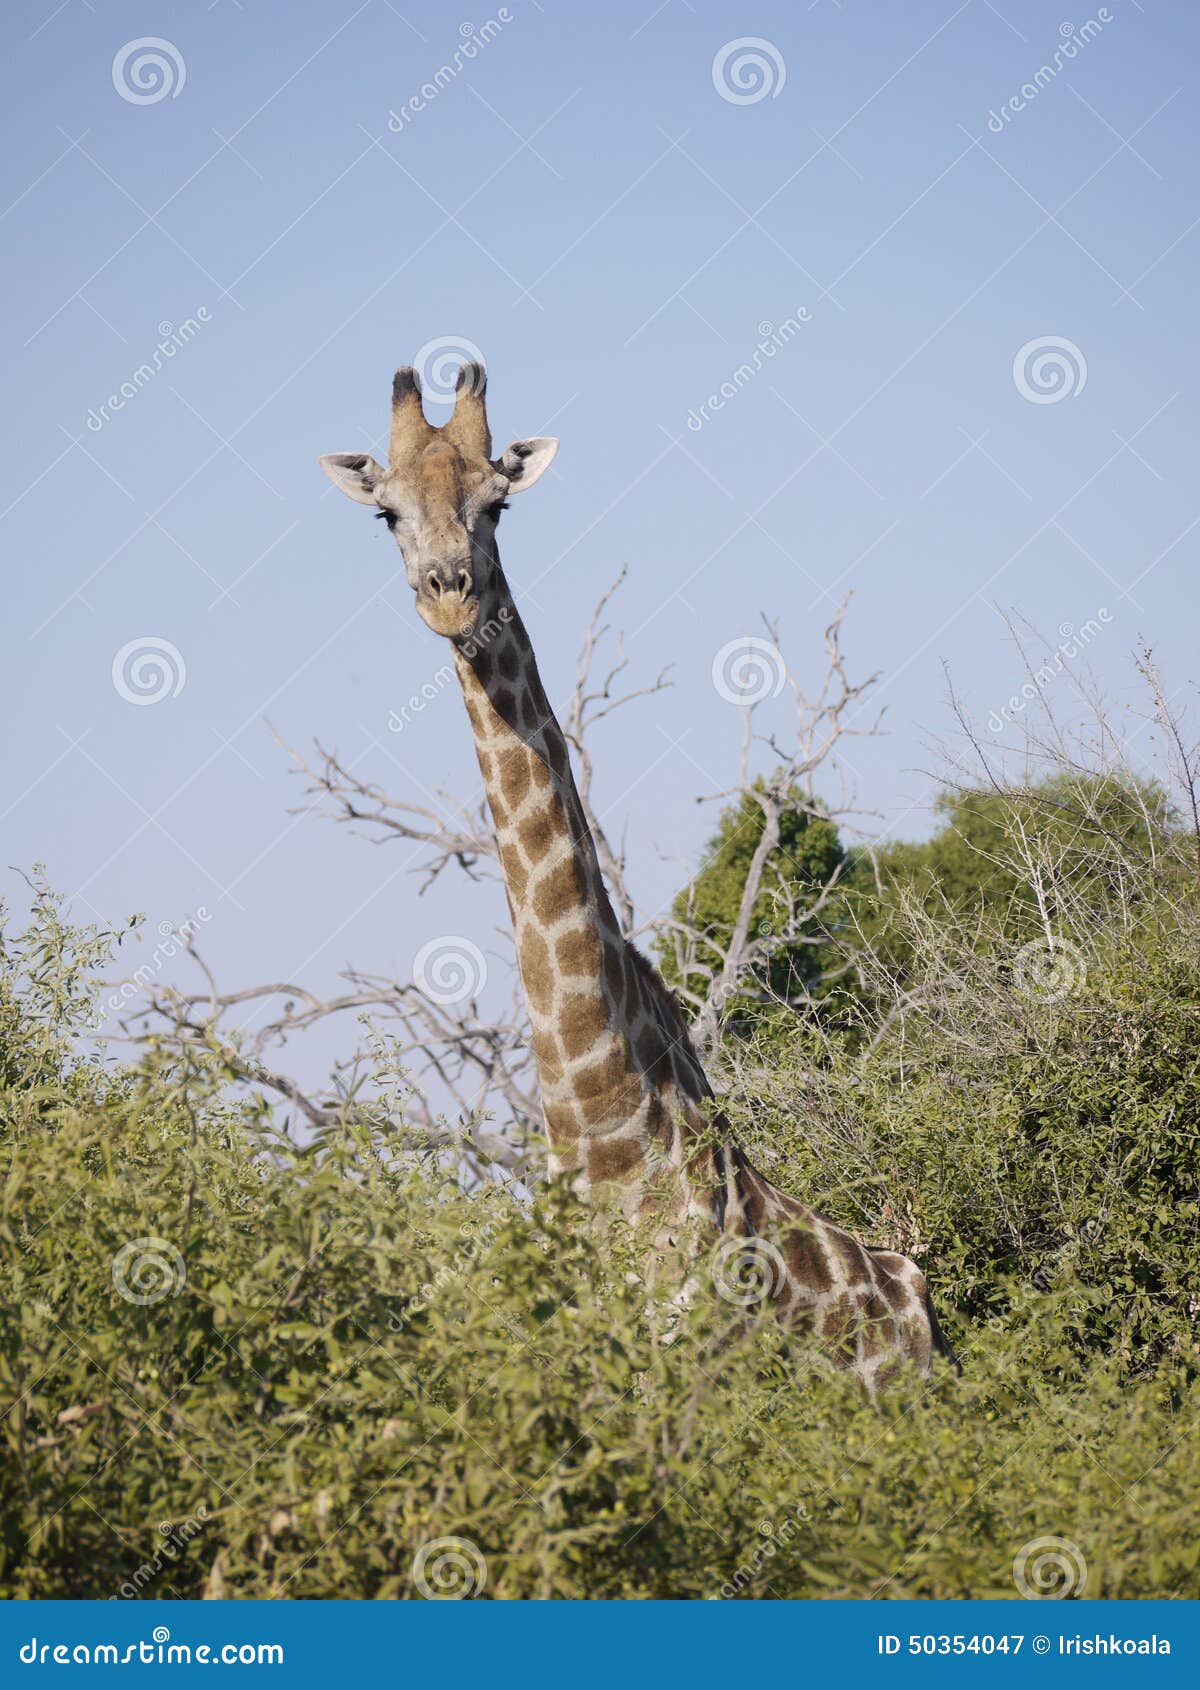 angolan giraffe